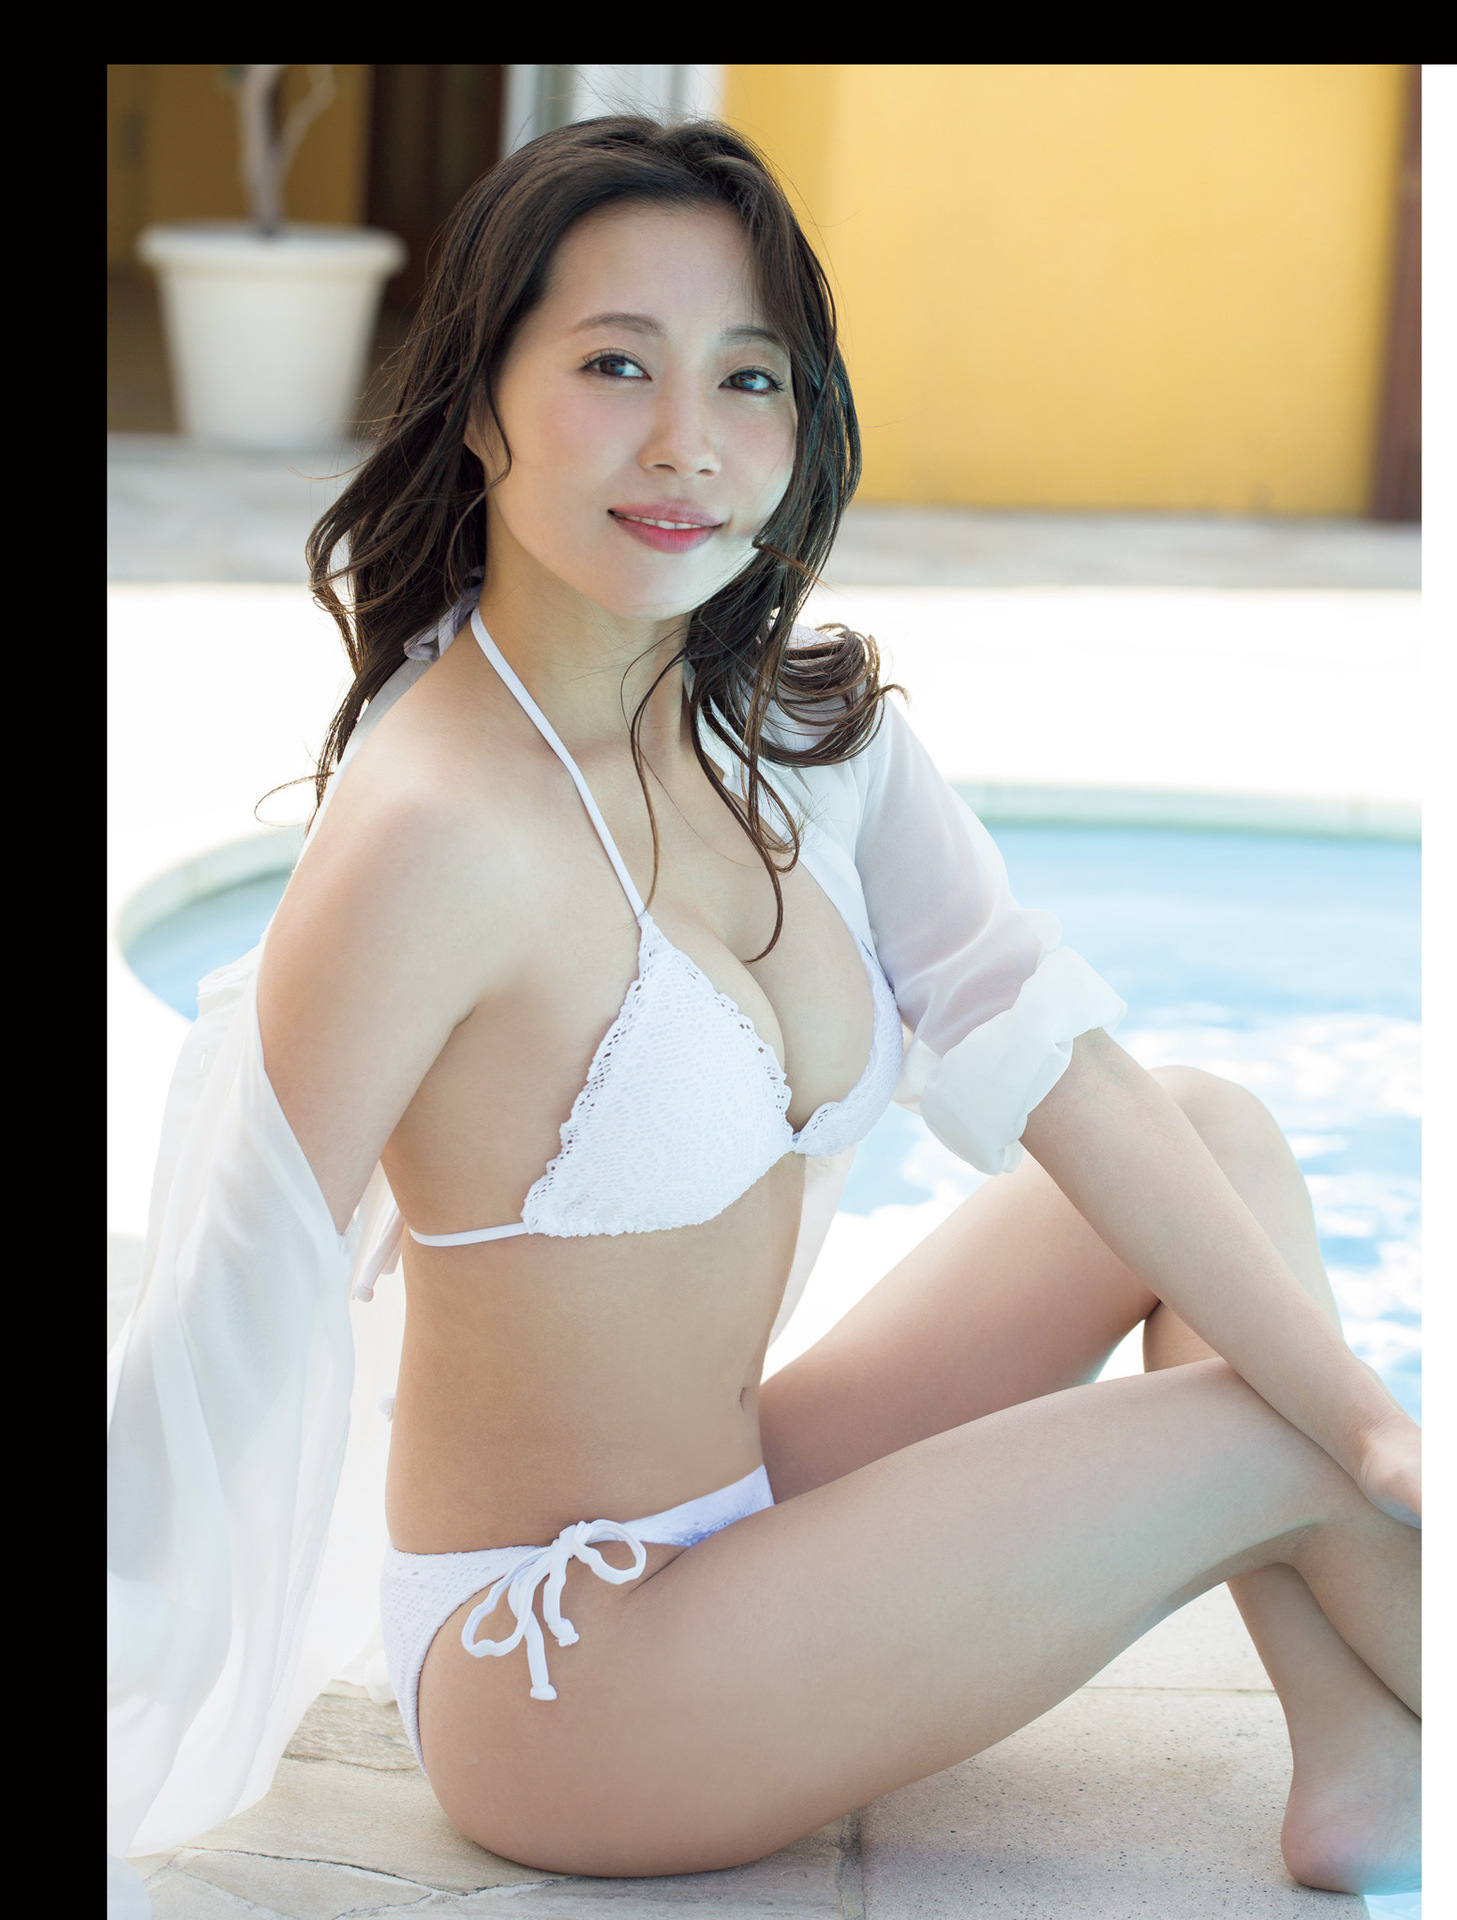 Asuka Fukudas first hair nude 20 years after quitting ”Morning Musume007